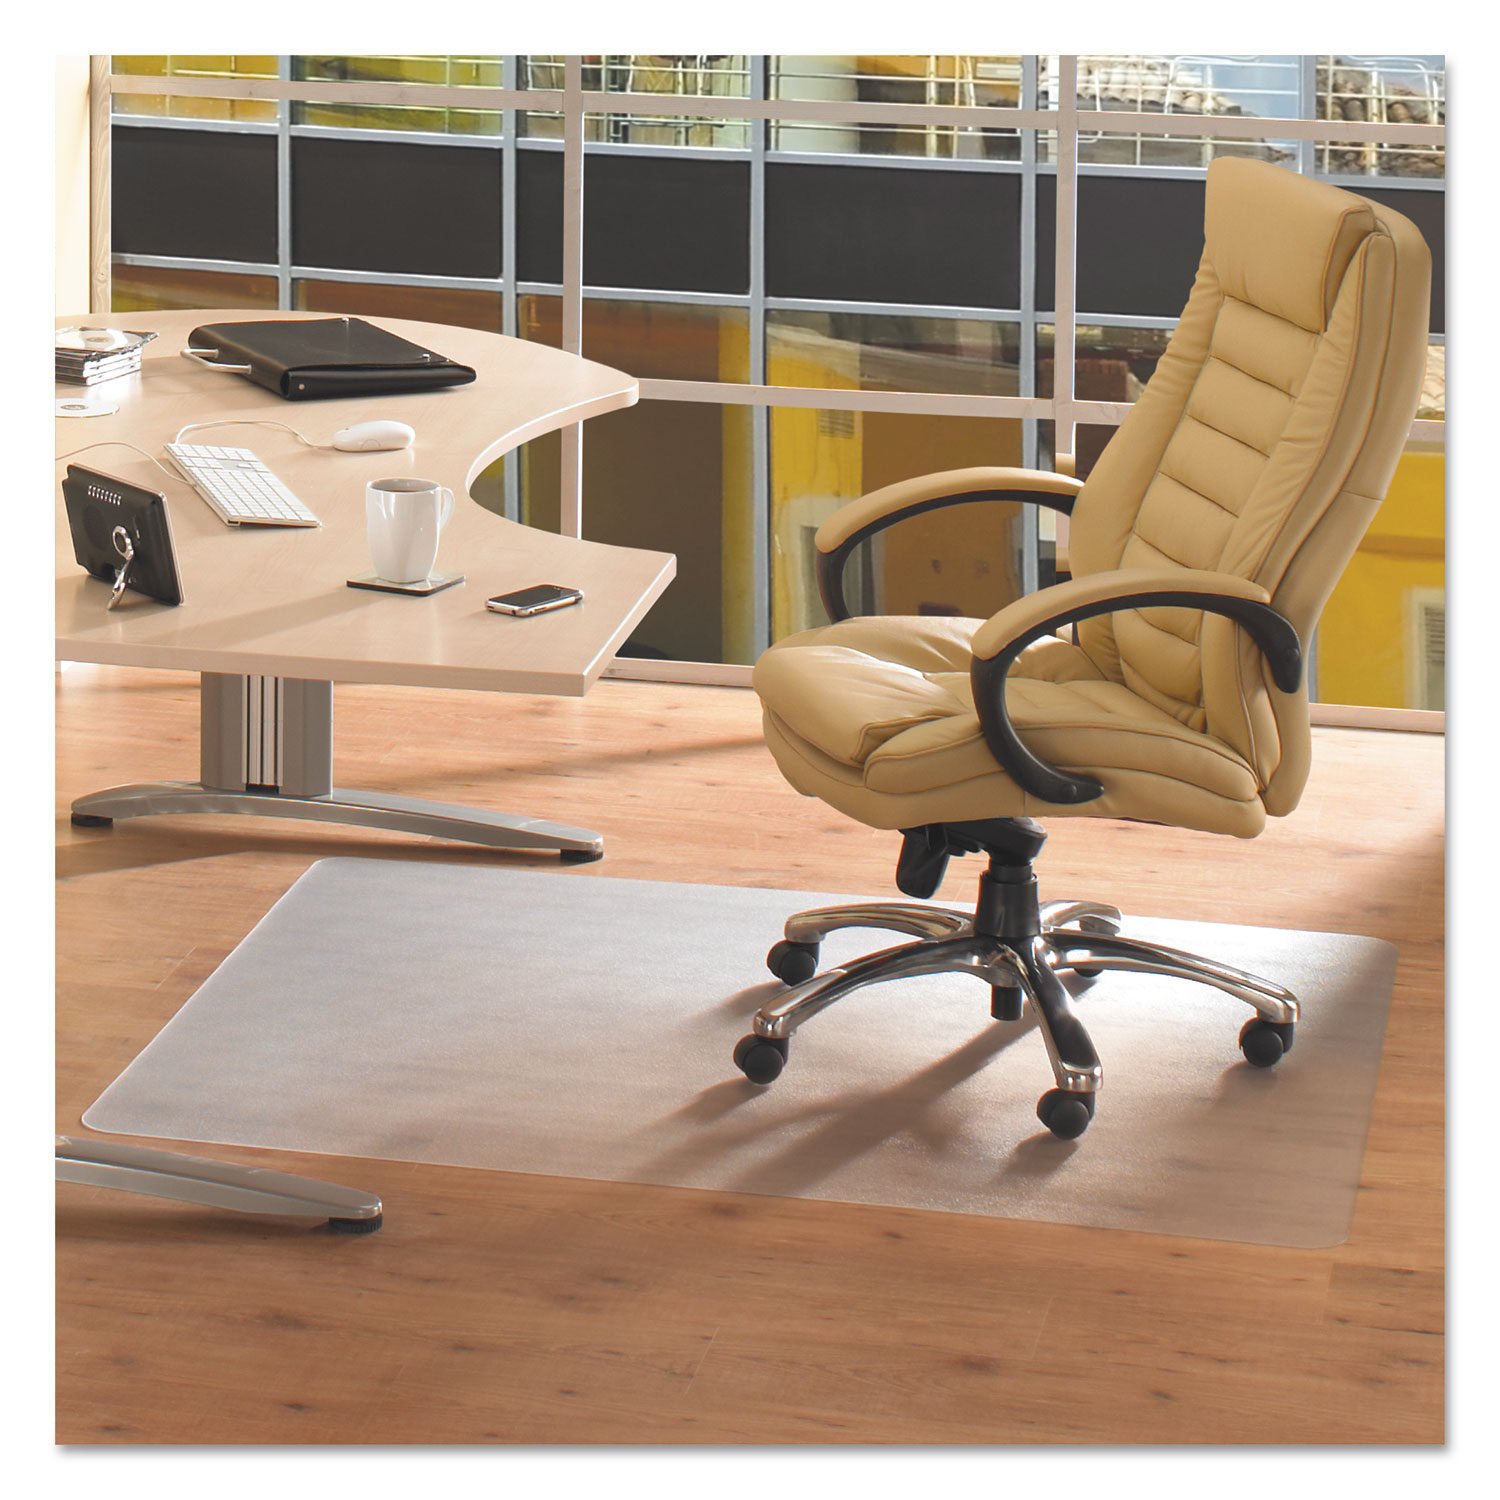  Floortex PF129225EV Cleartex Advantagemat Phthalate Free PVC Chair Mat for Hard Floors, 48 x 36, Clear (FLRPF129225EV) 